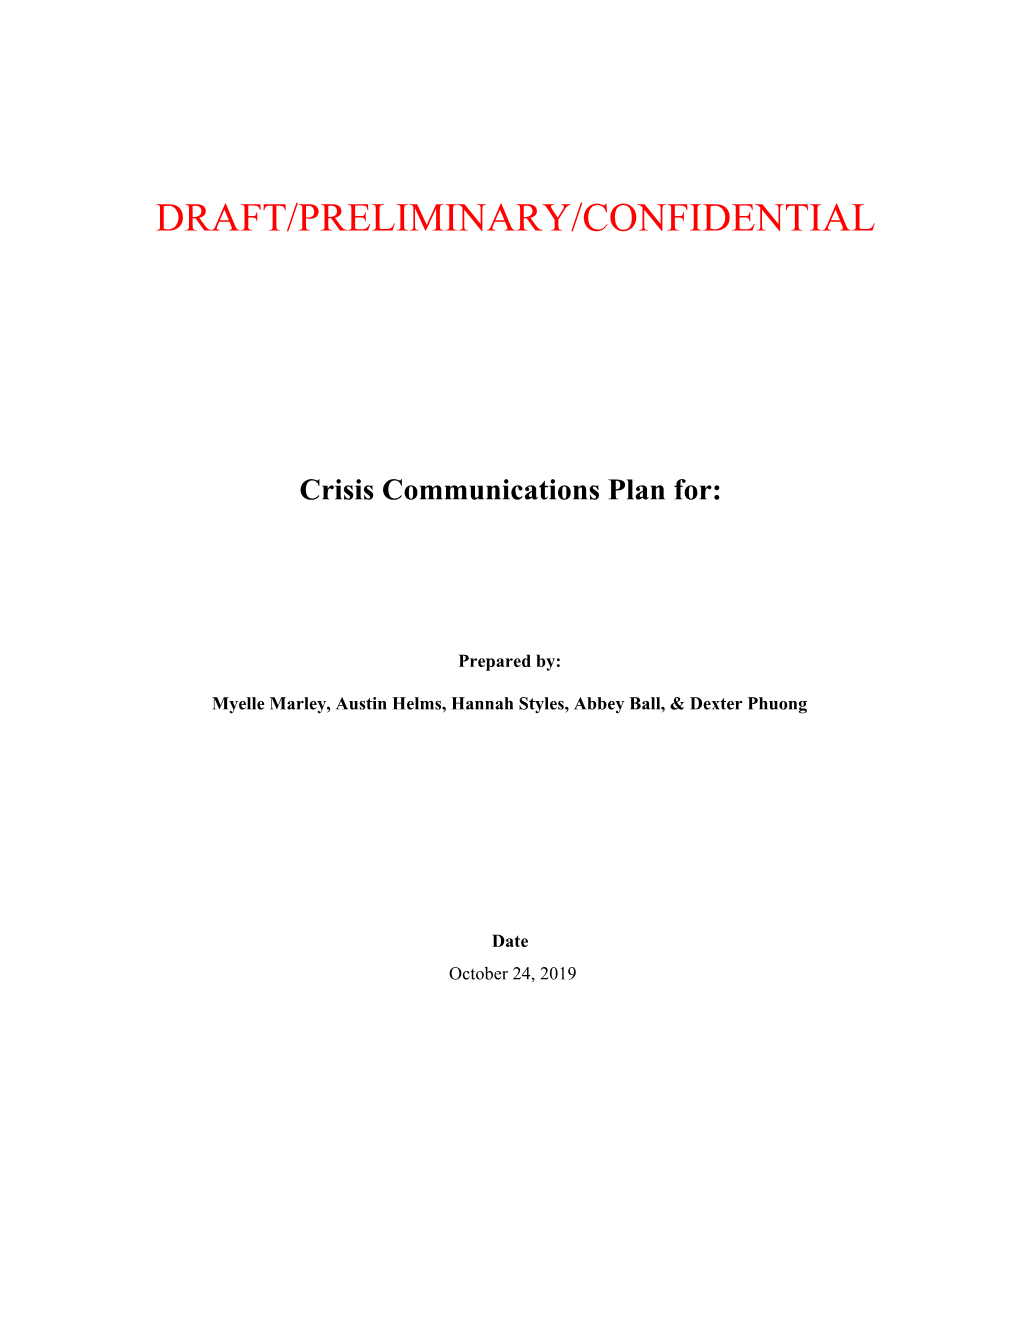 Draft/Preliminary/Confidential